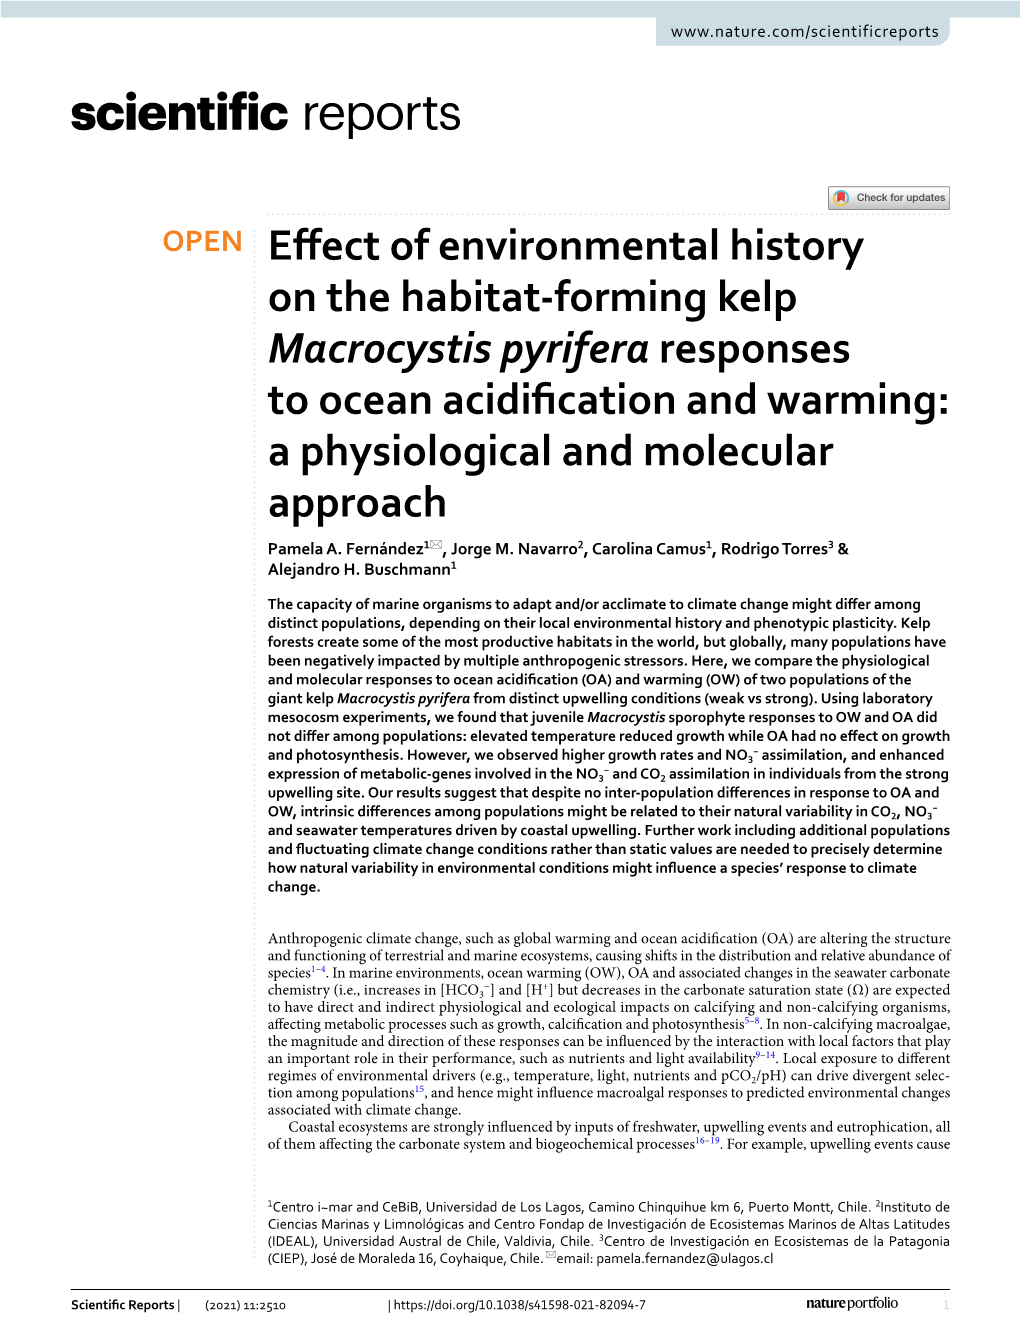 Effect of Environmental History on the Habitat-Forming Kelp Macrocystis